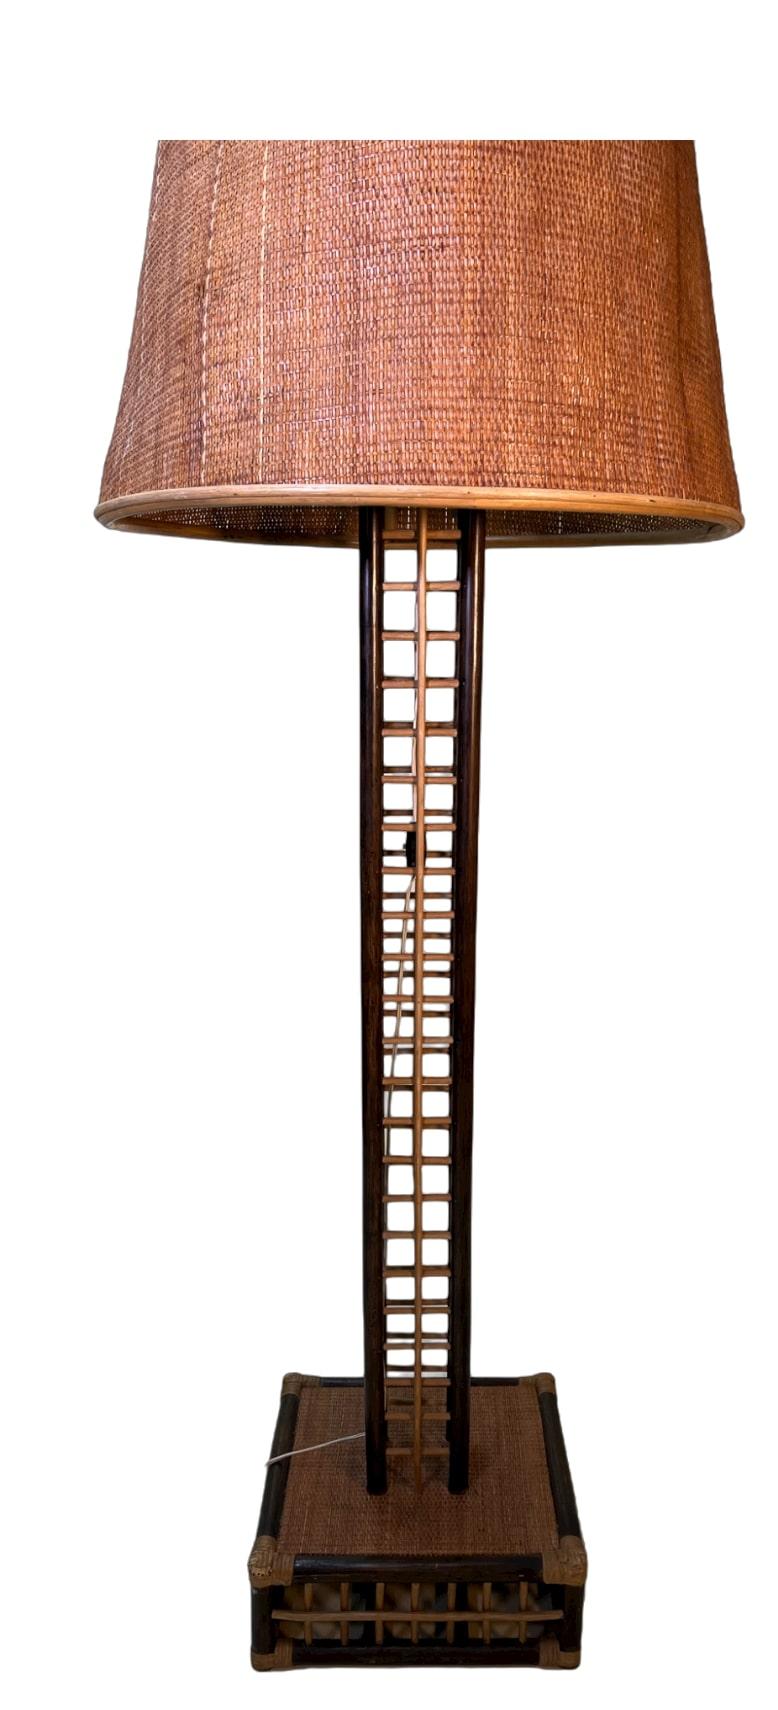 1970's Bamboo Floor Lamp.
Bamboo floor lamp dark brown and beige. Light brown shade. 